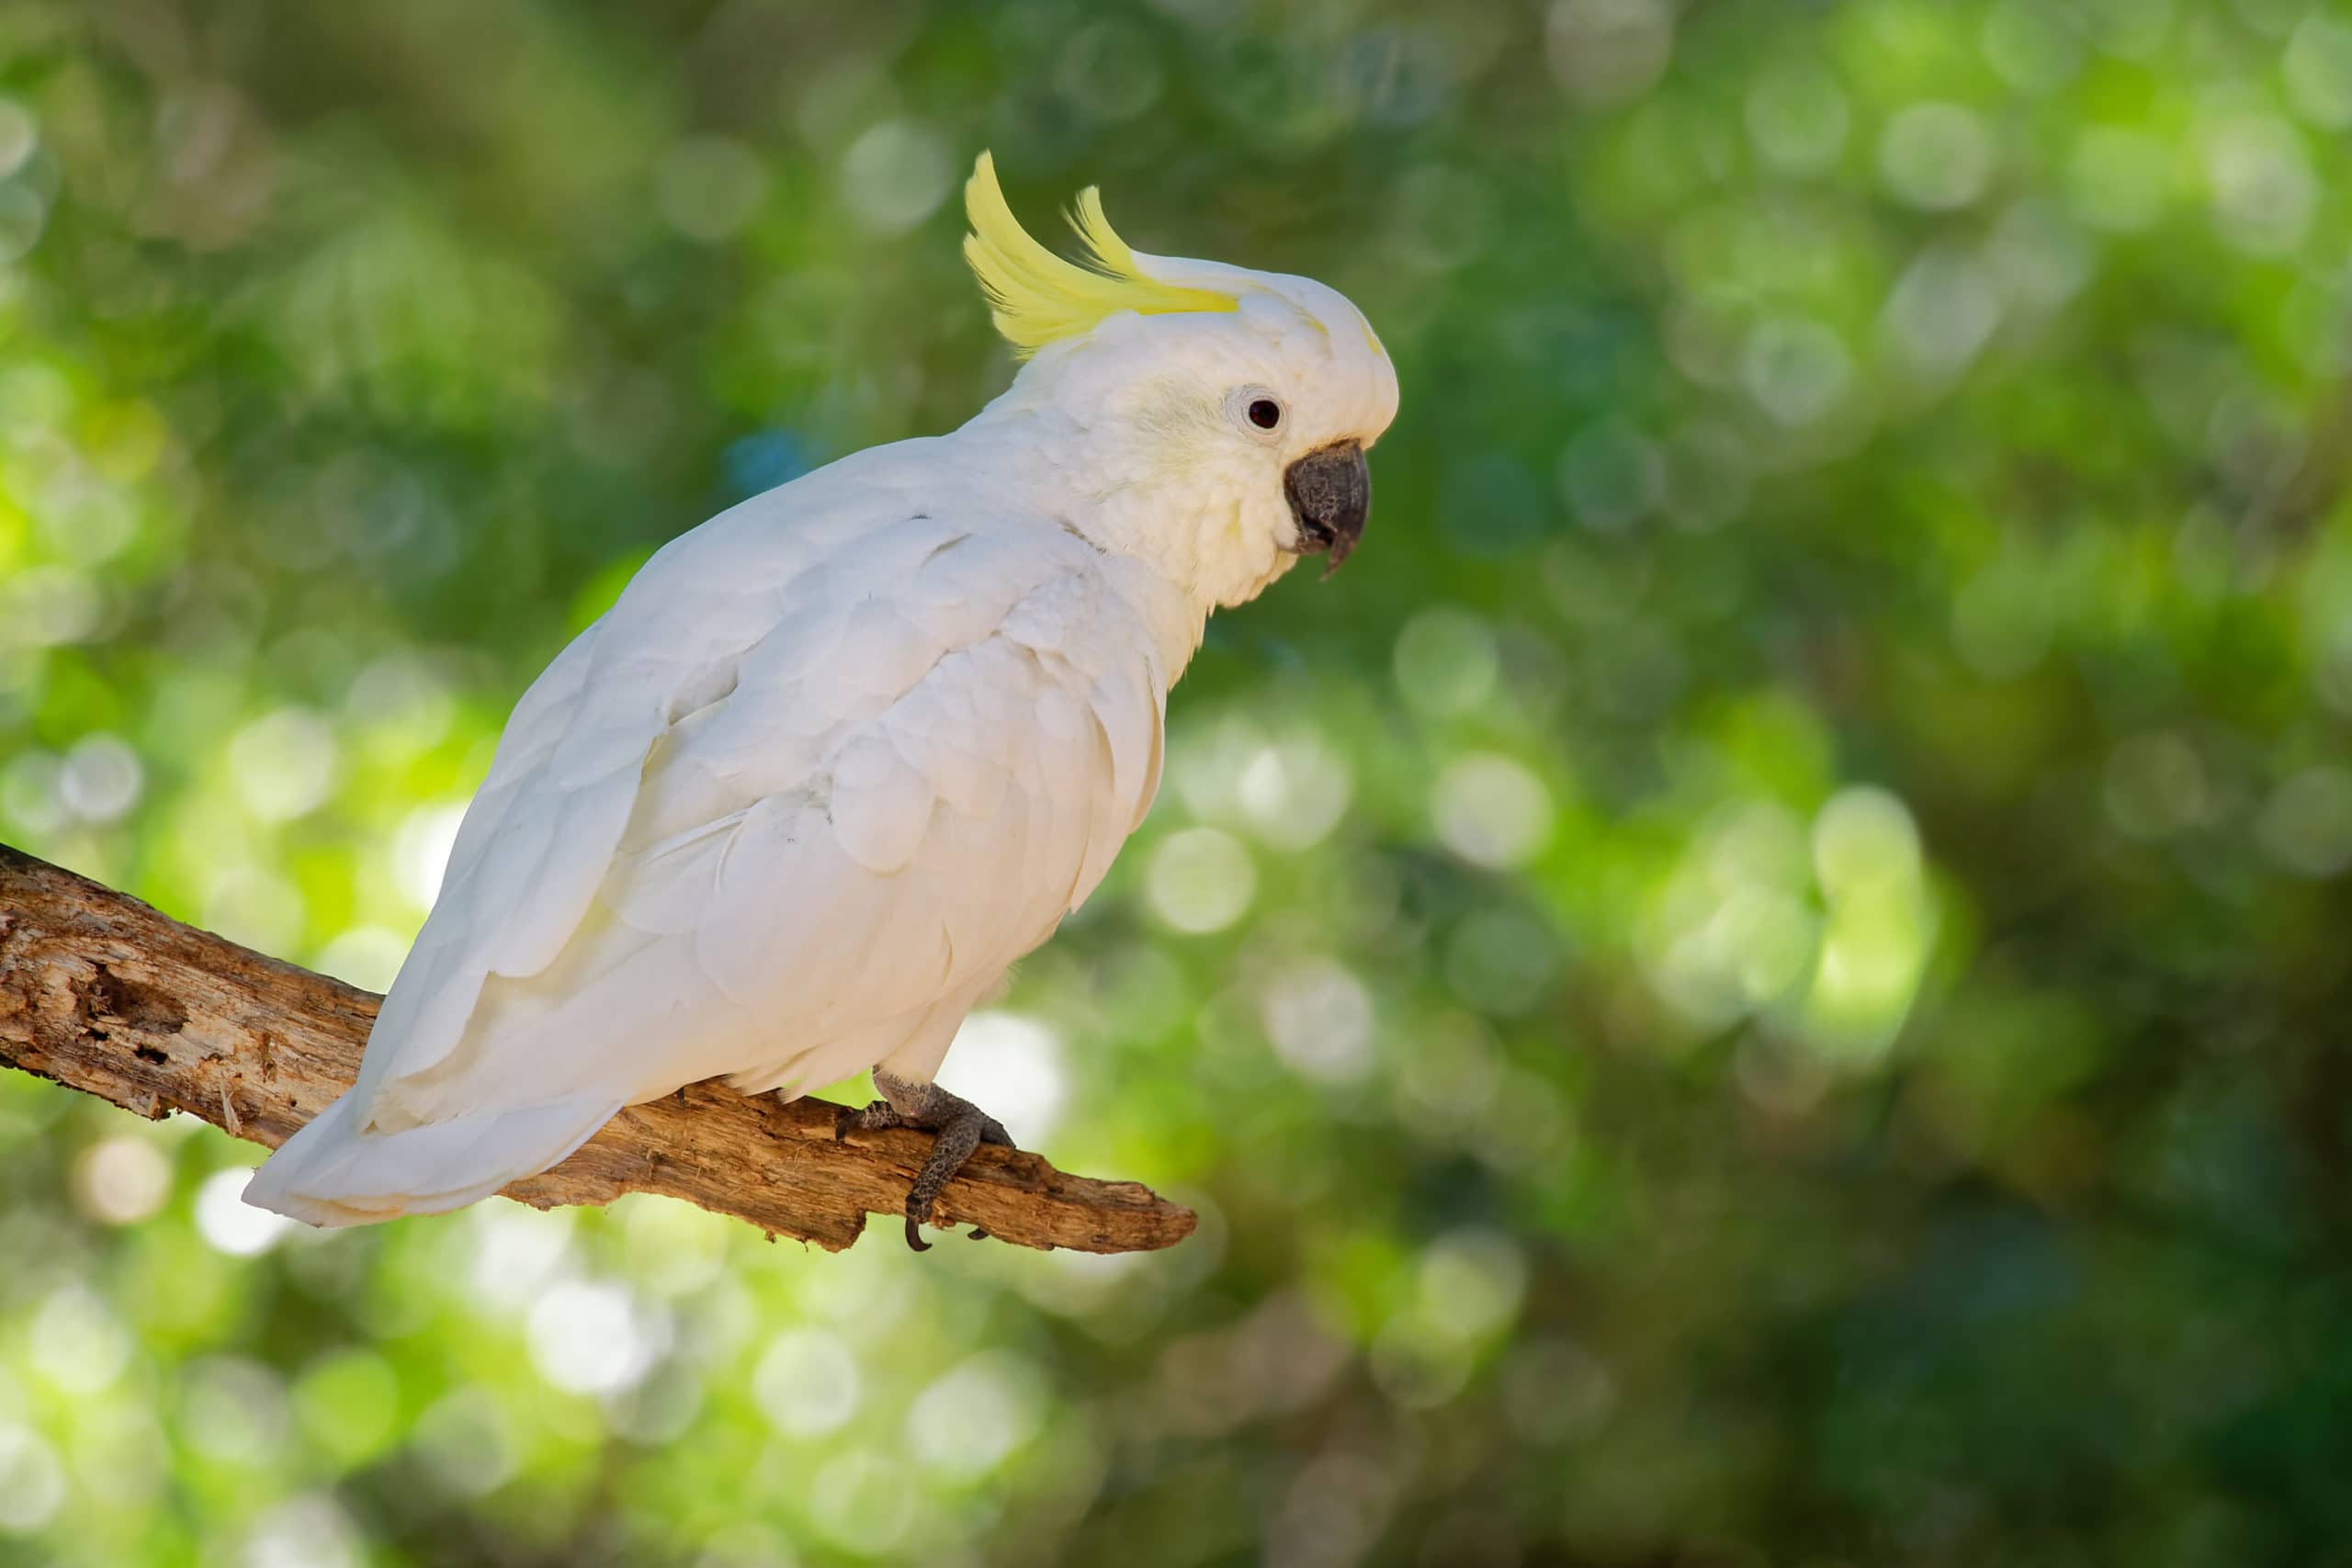 yellow cockatoo